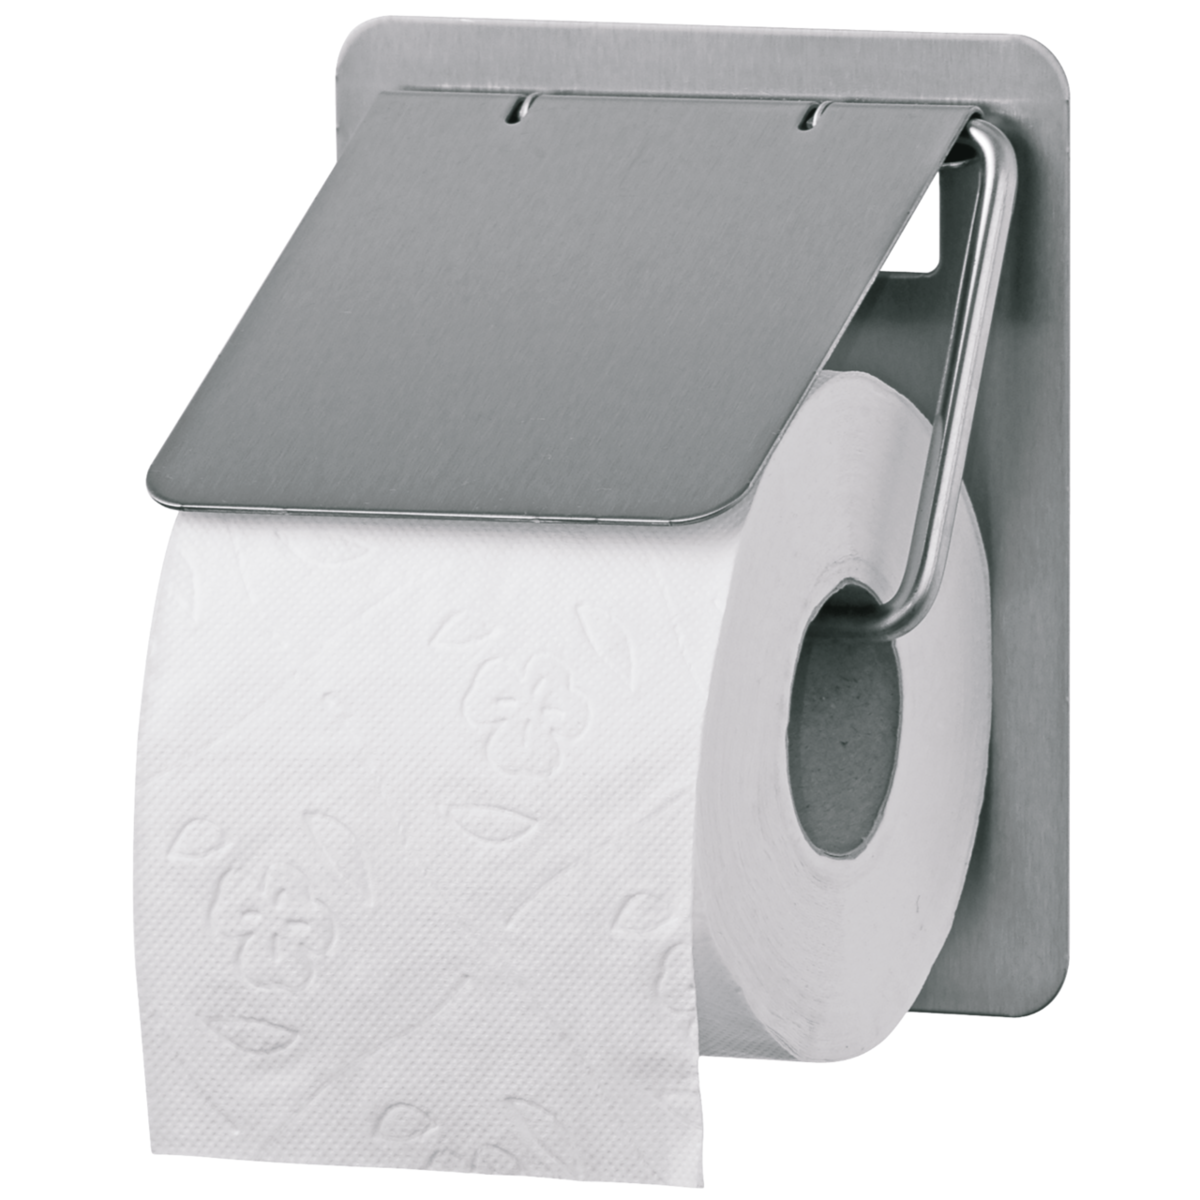 SanTRAL Toilettenpapierspender TRU 1 E AFP für 1 Standardrolle